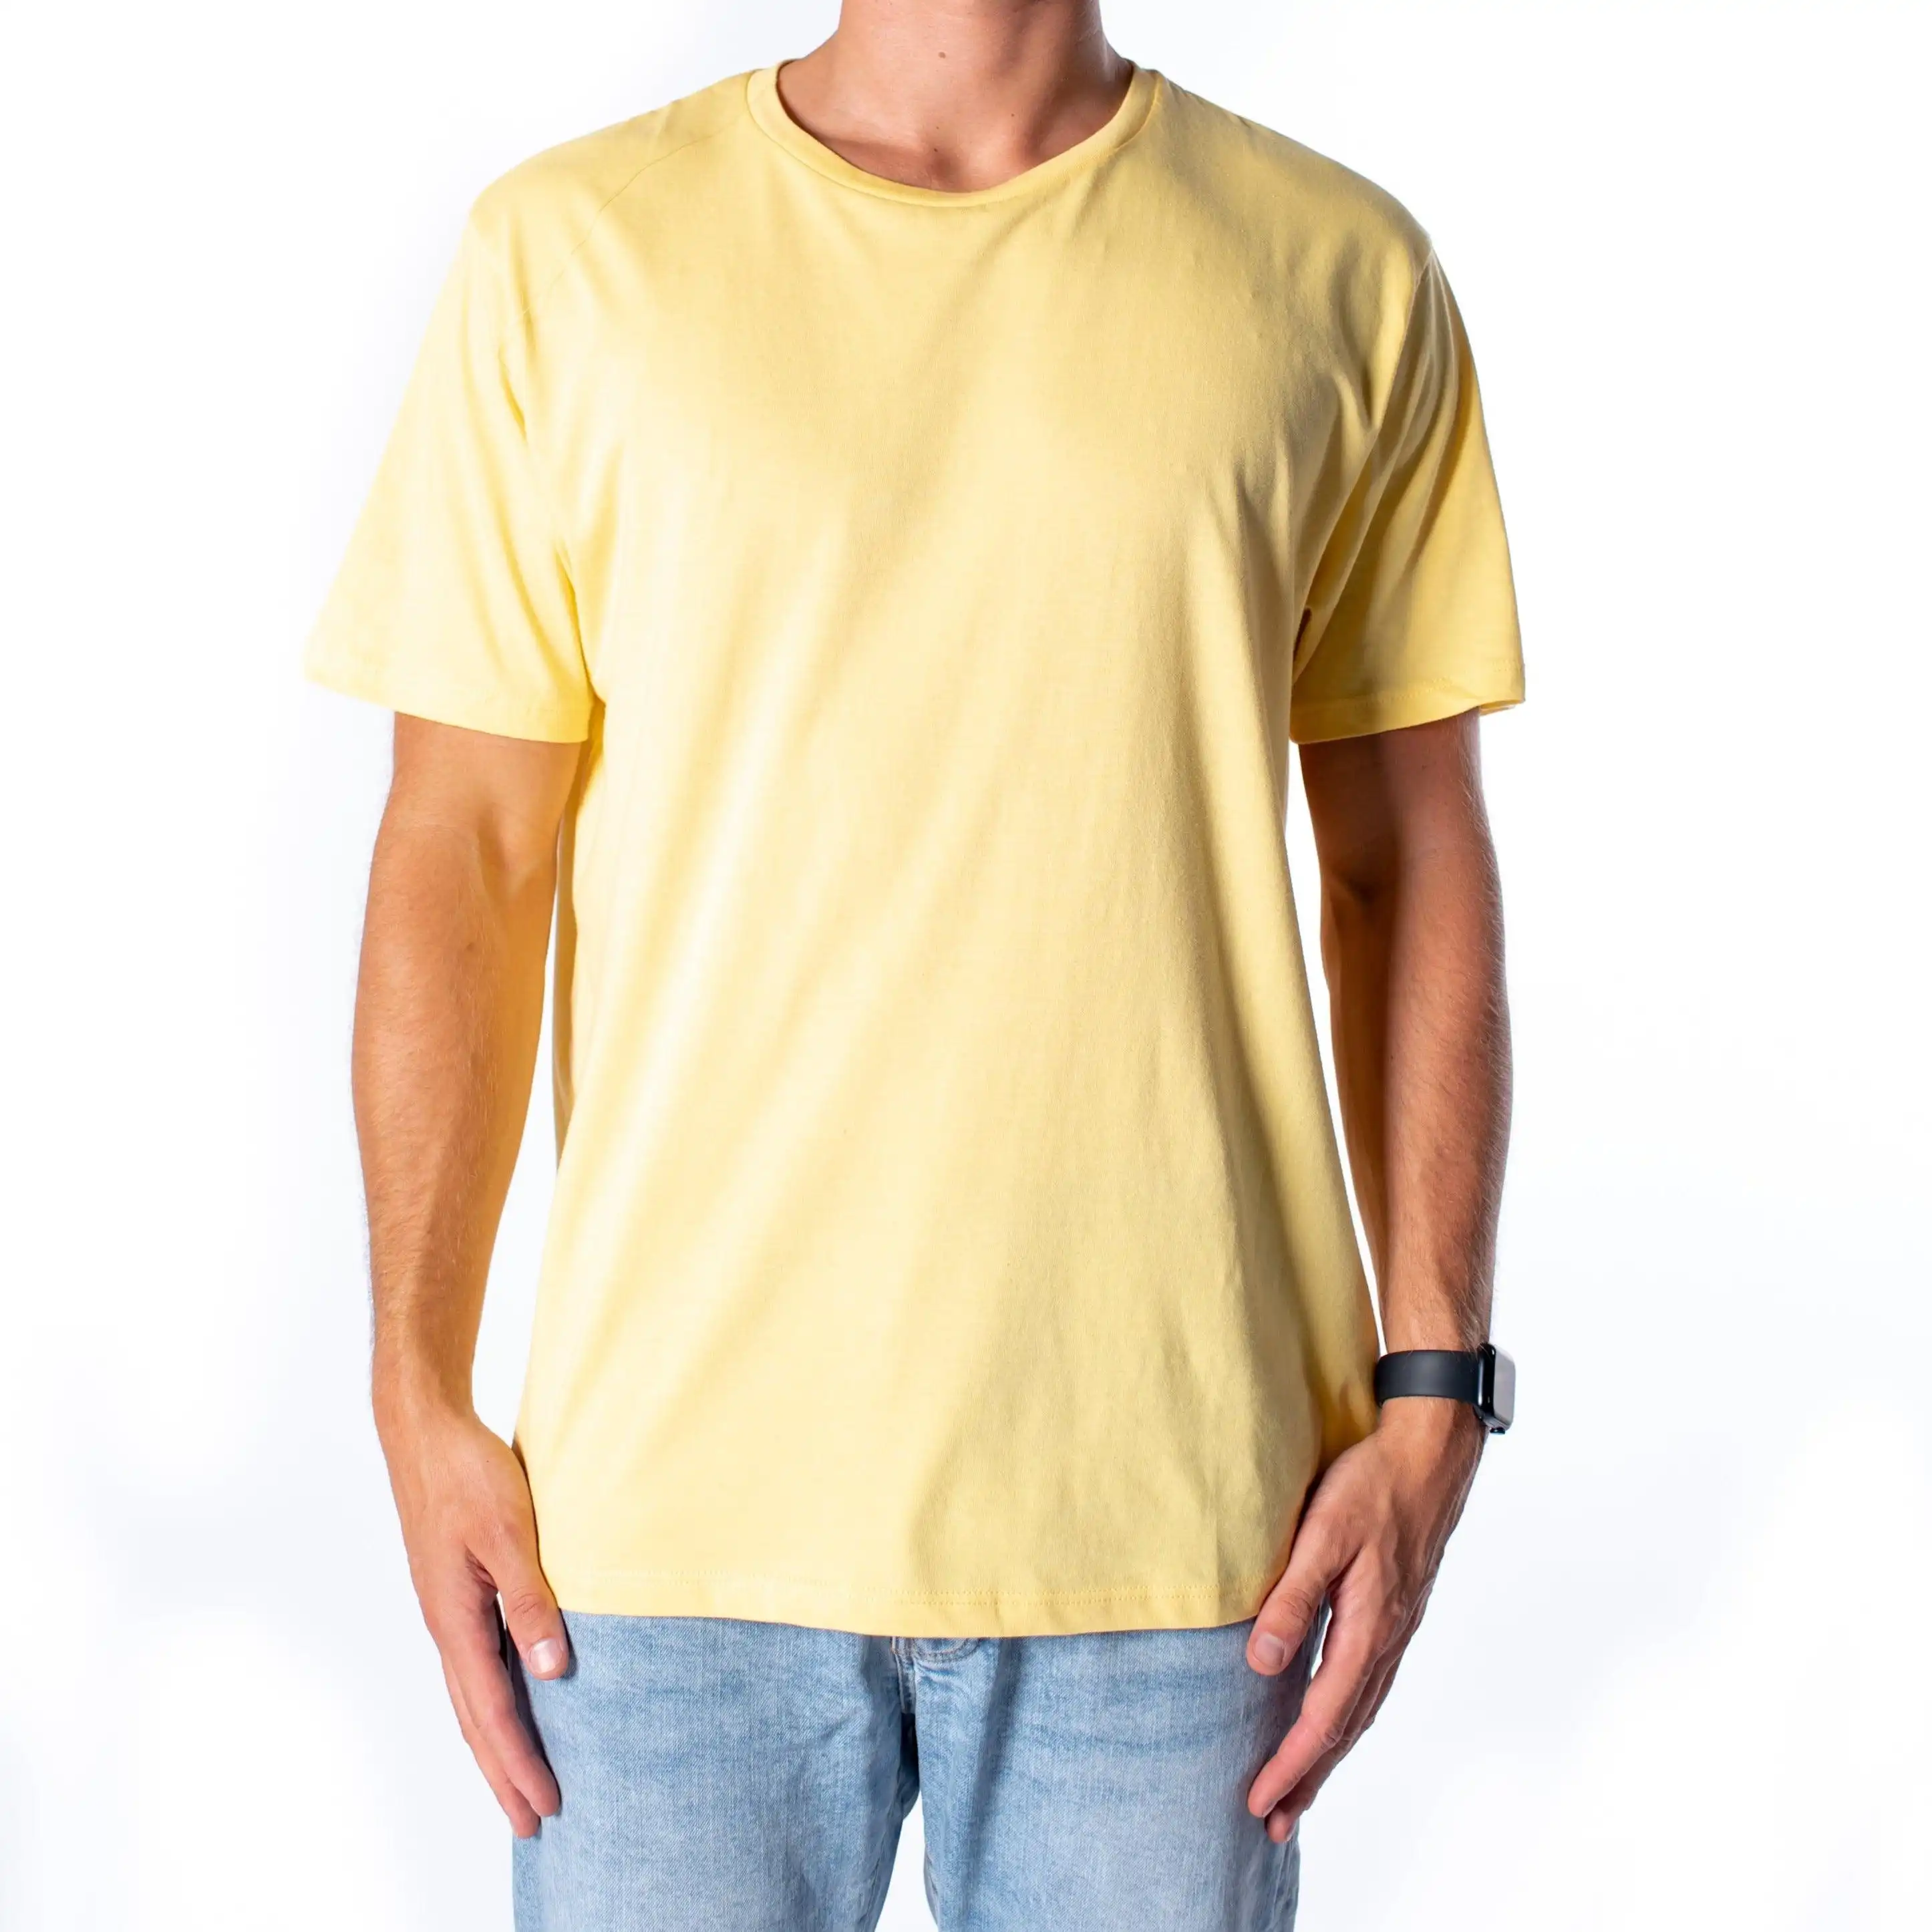 Topman Men's Regular Fit Yellow T-Shirt